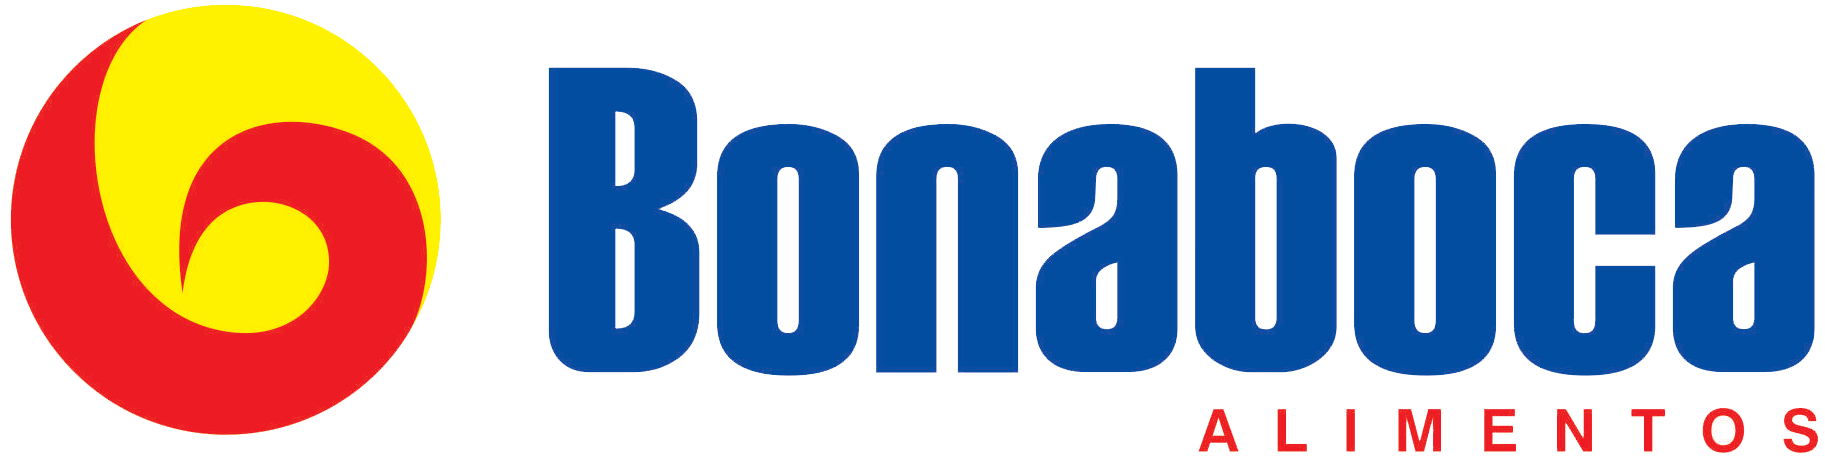 Bonaboca